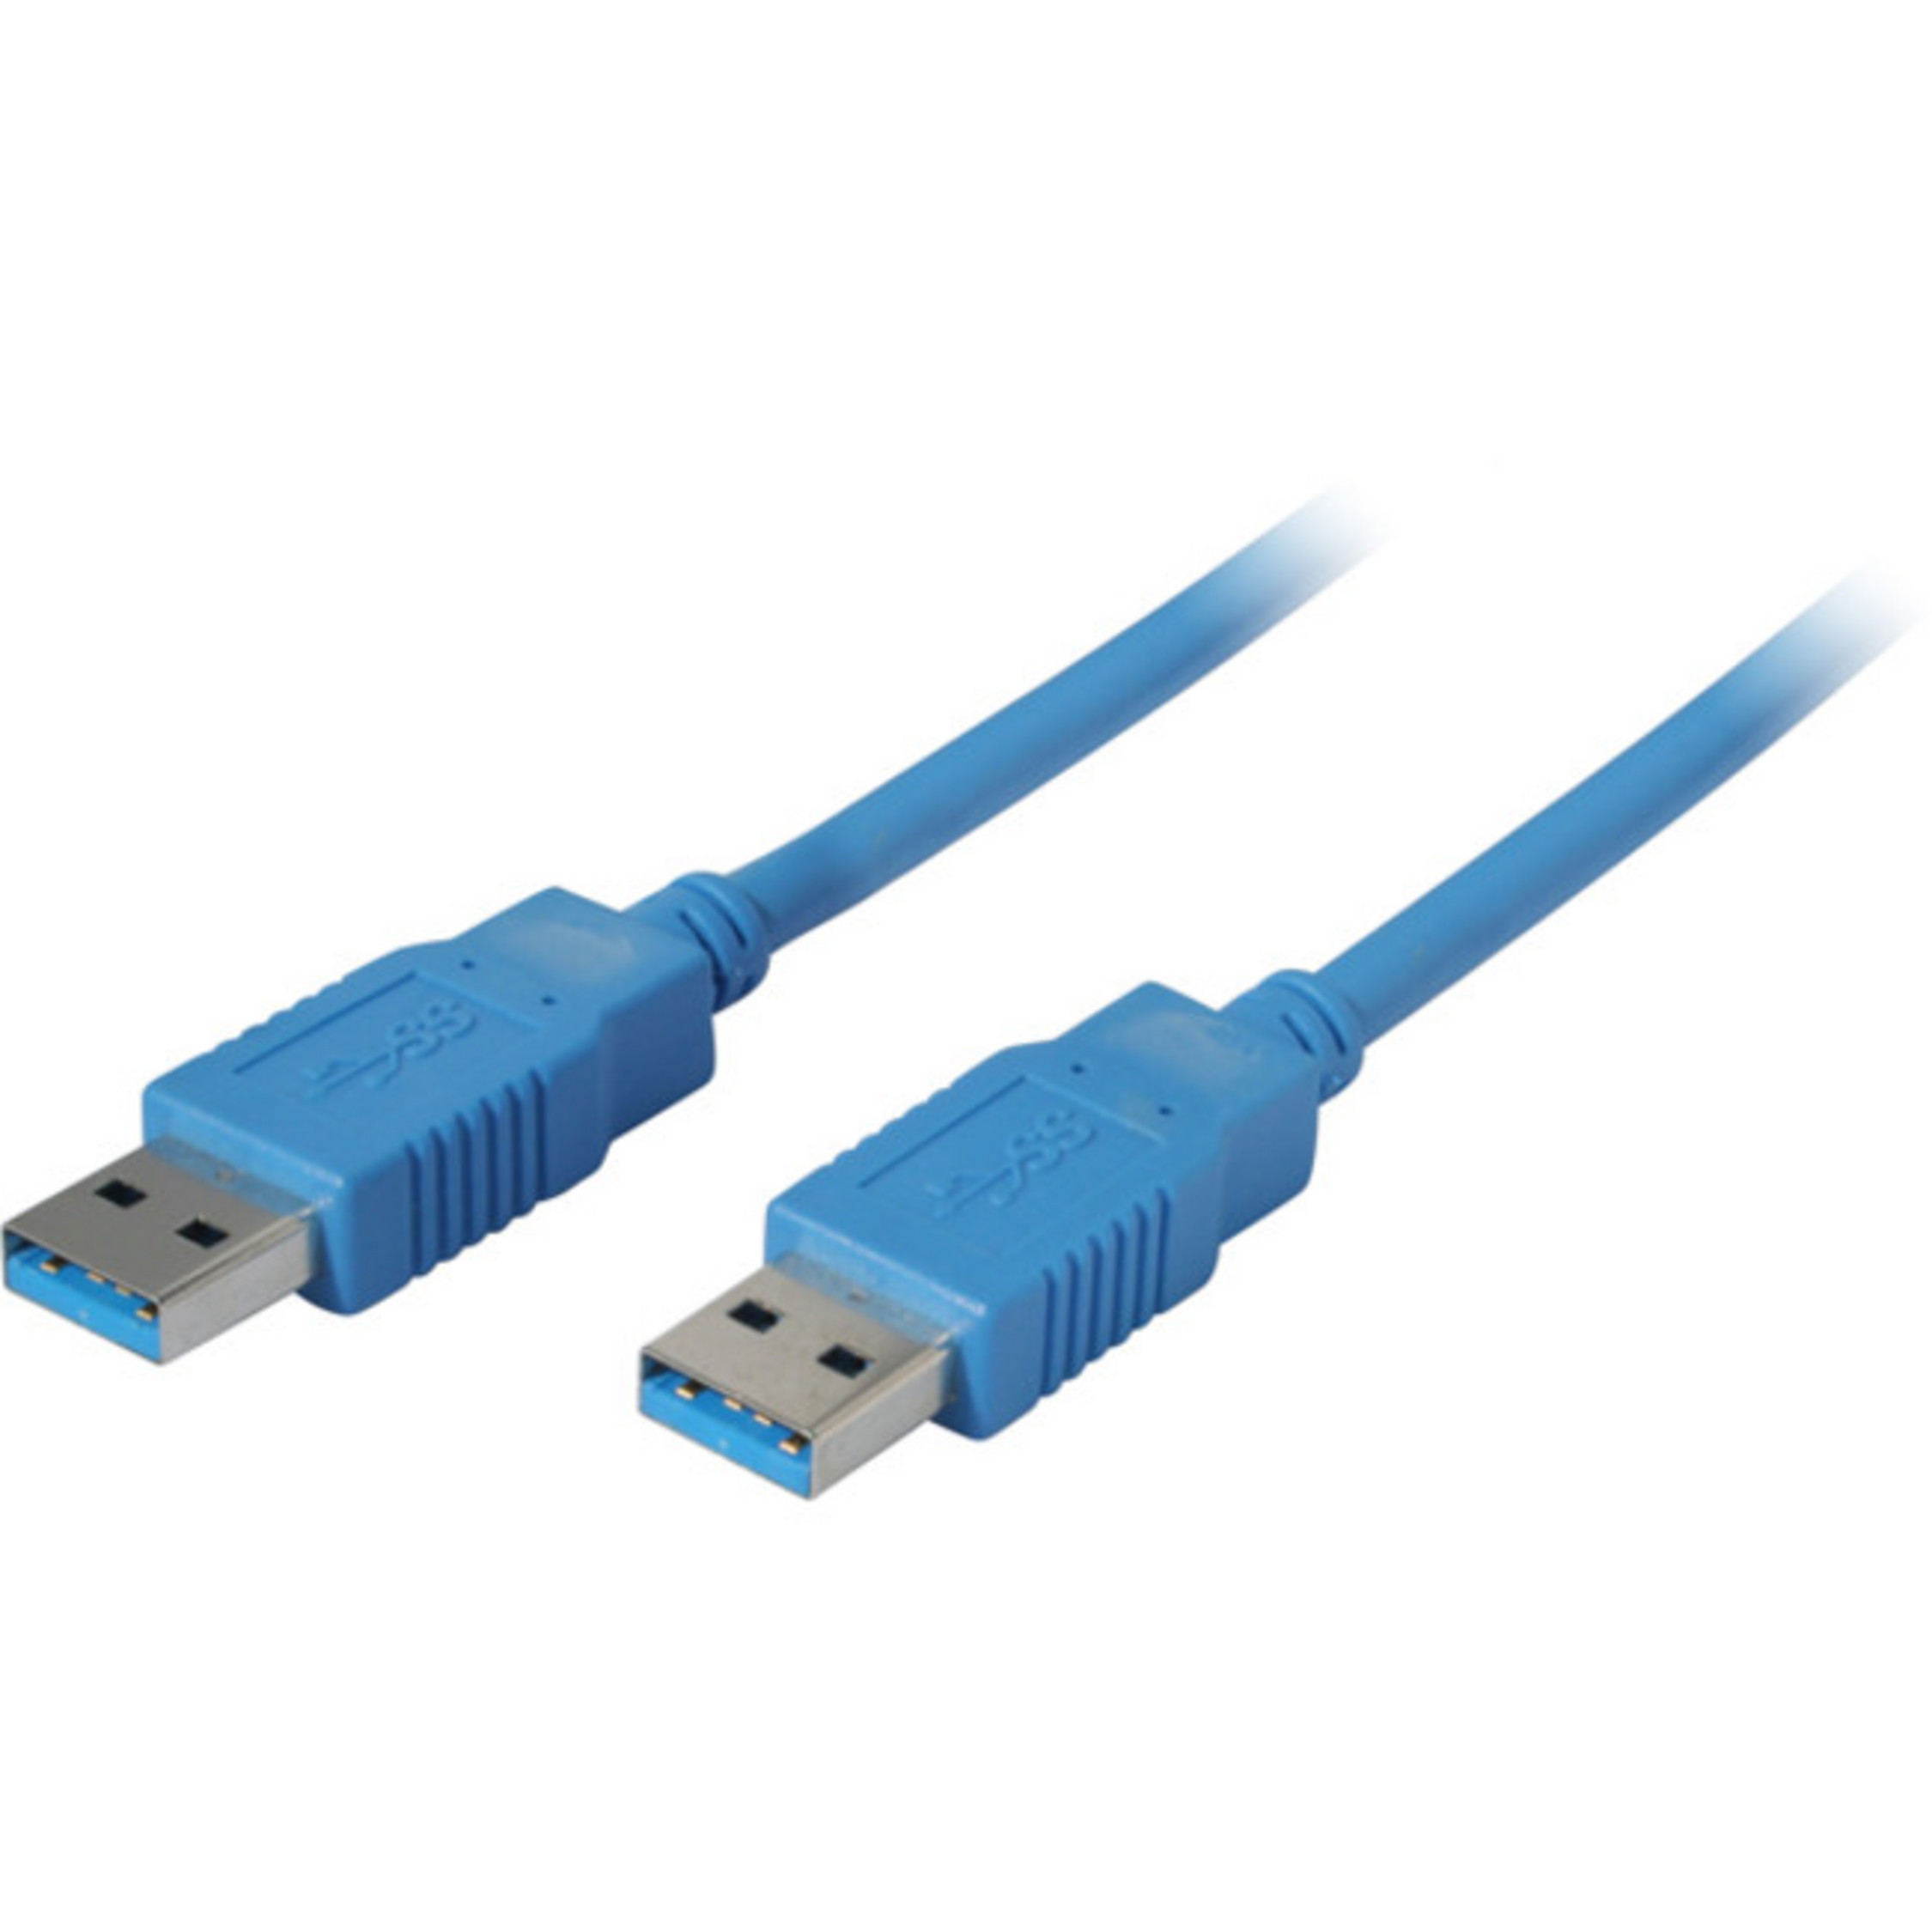 S/CONN MAXIMUM USB 3.0 Stecker Kabel USB Kabel blau 1m / USB CONNECTIVITY Stecker A A